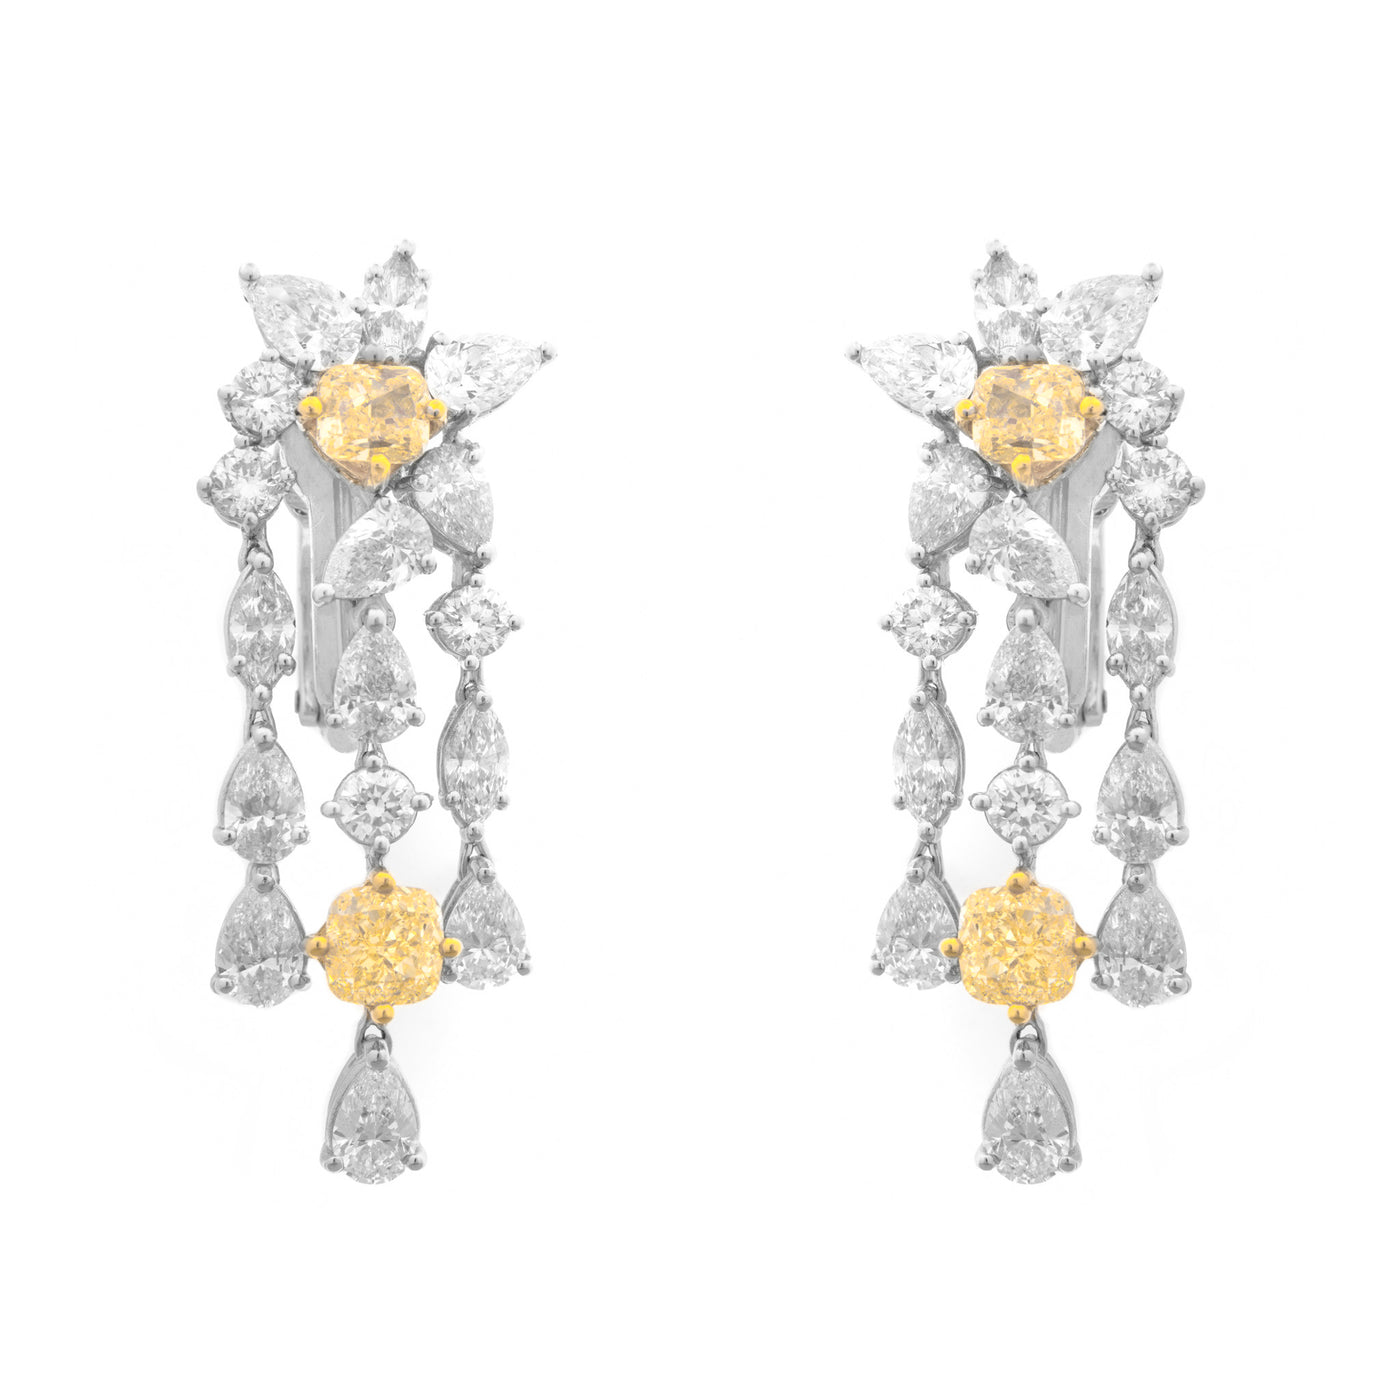 White Gold Diamond Earring with Fancy Yellow Diamond, by Soit Belle